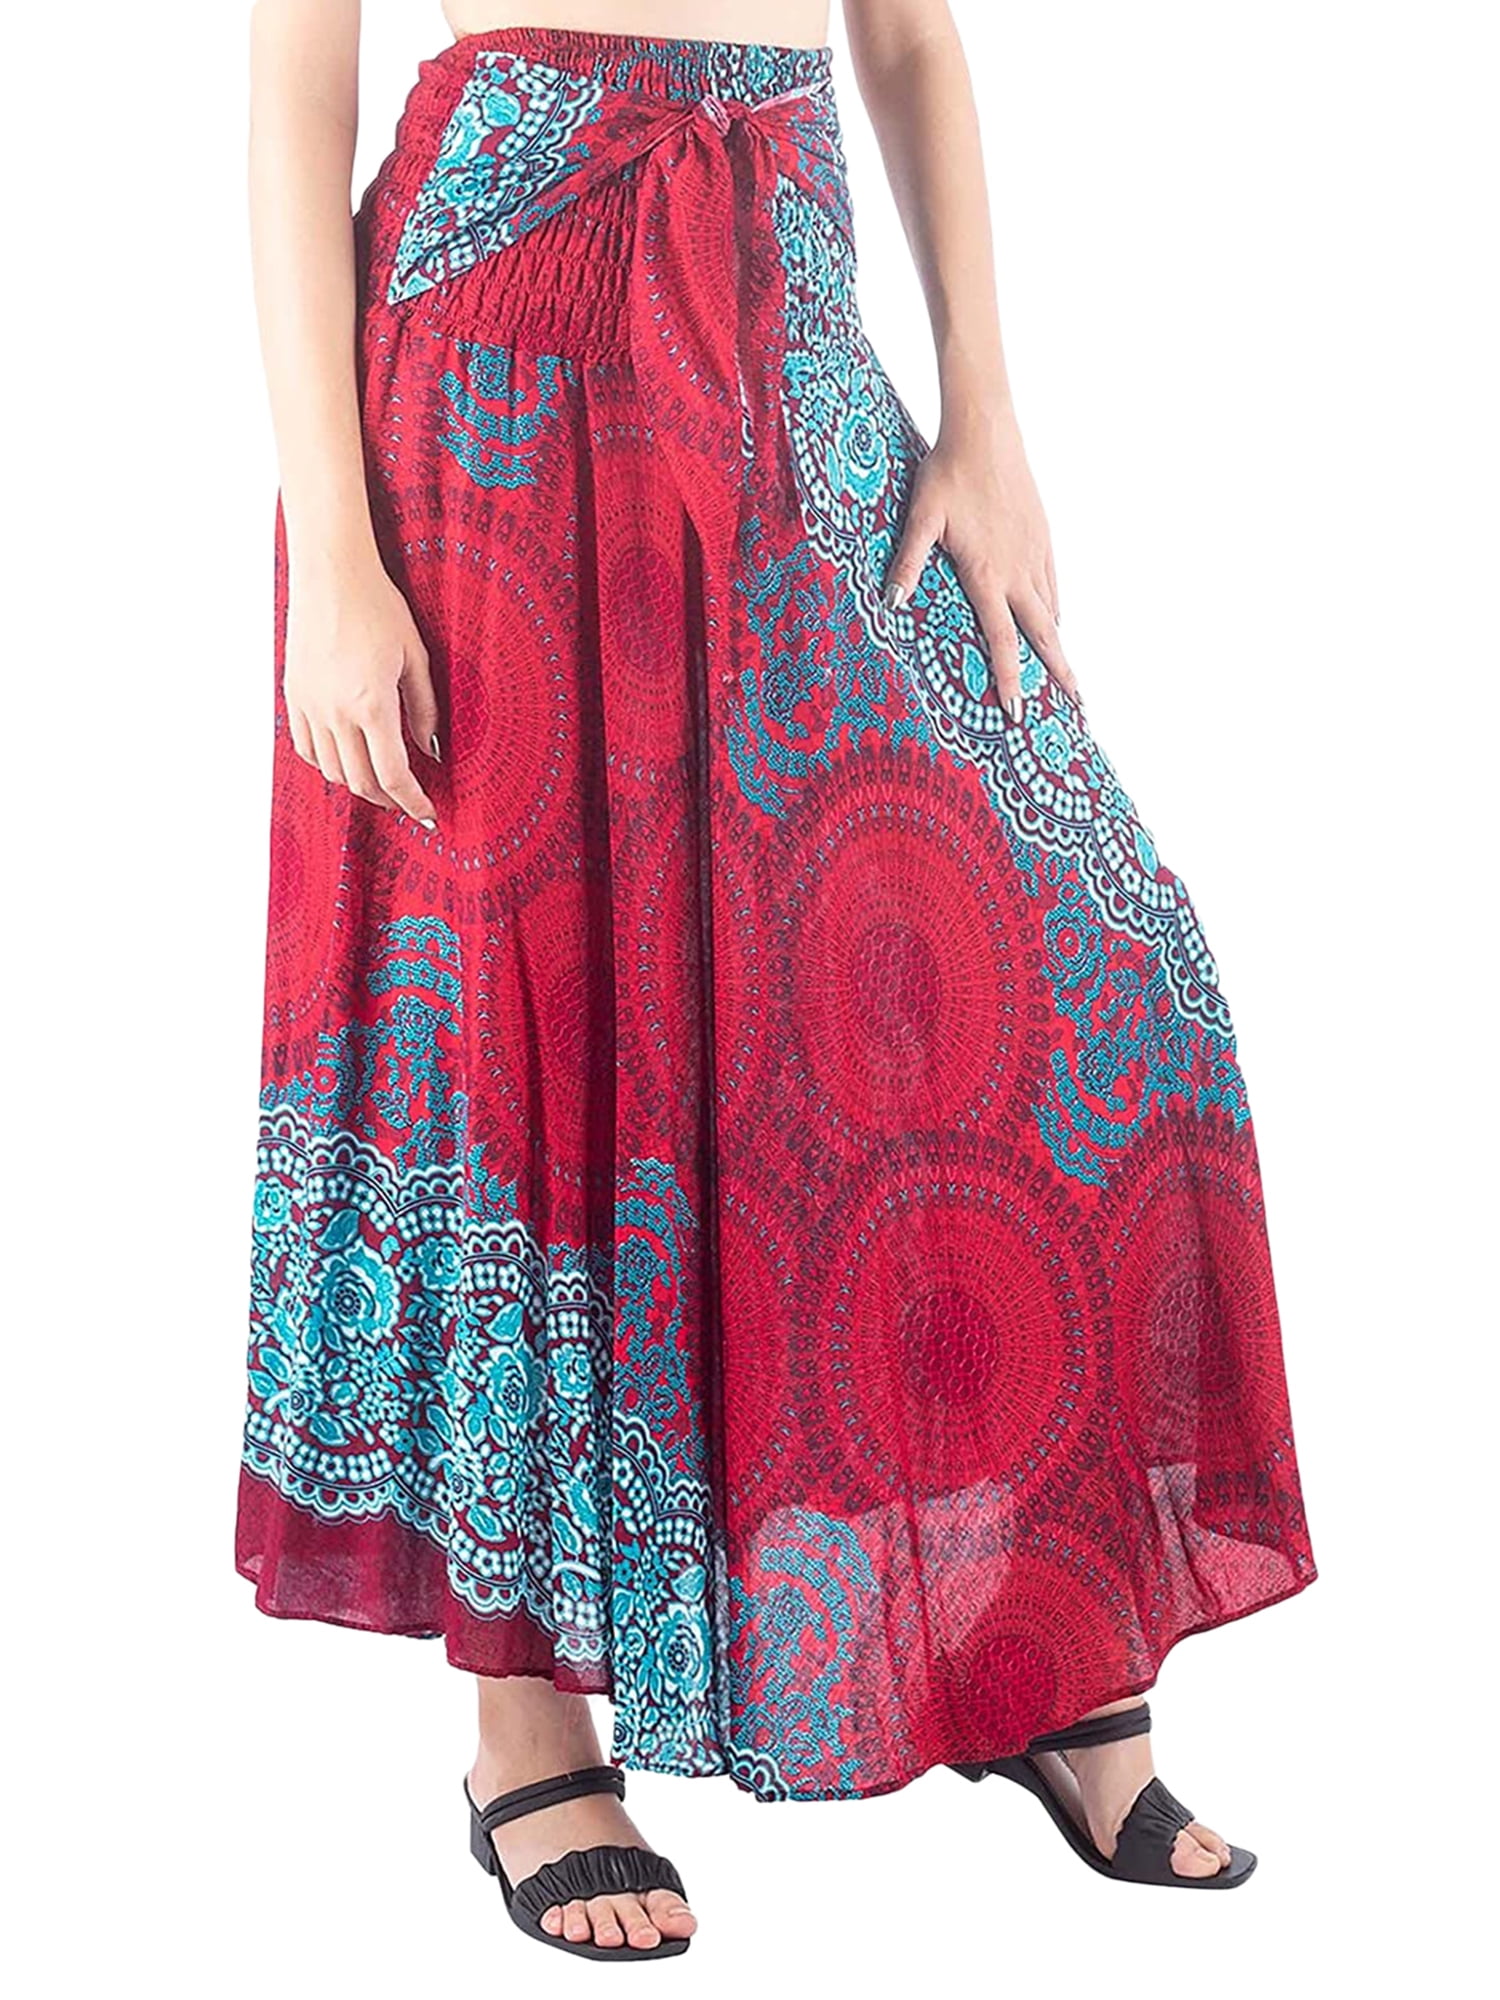 wybzd Women Maxi Boho High Gypsy Skirt Plus Size Summer Midi Beach Dress Red L - Walmart.com